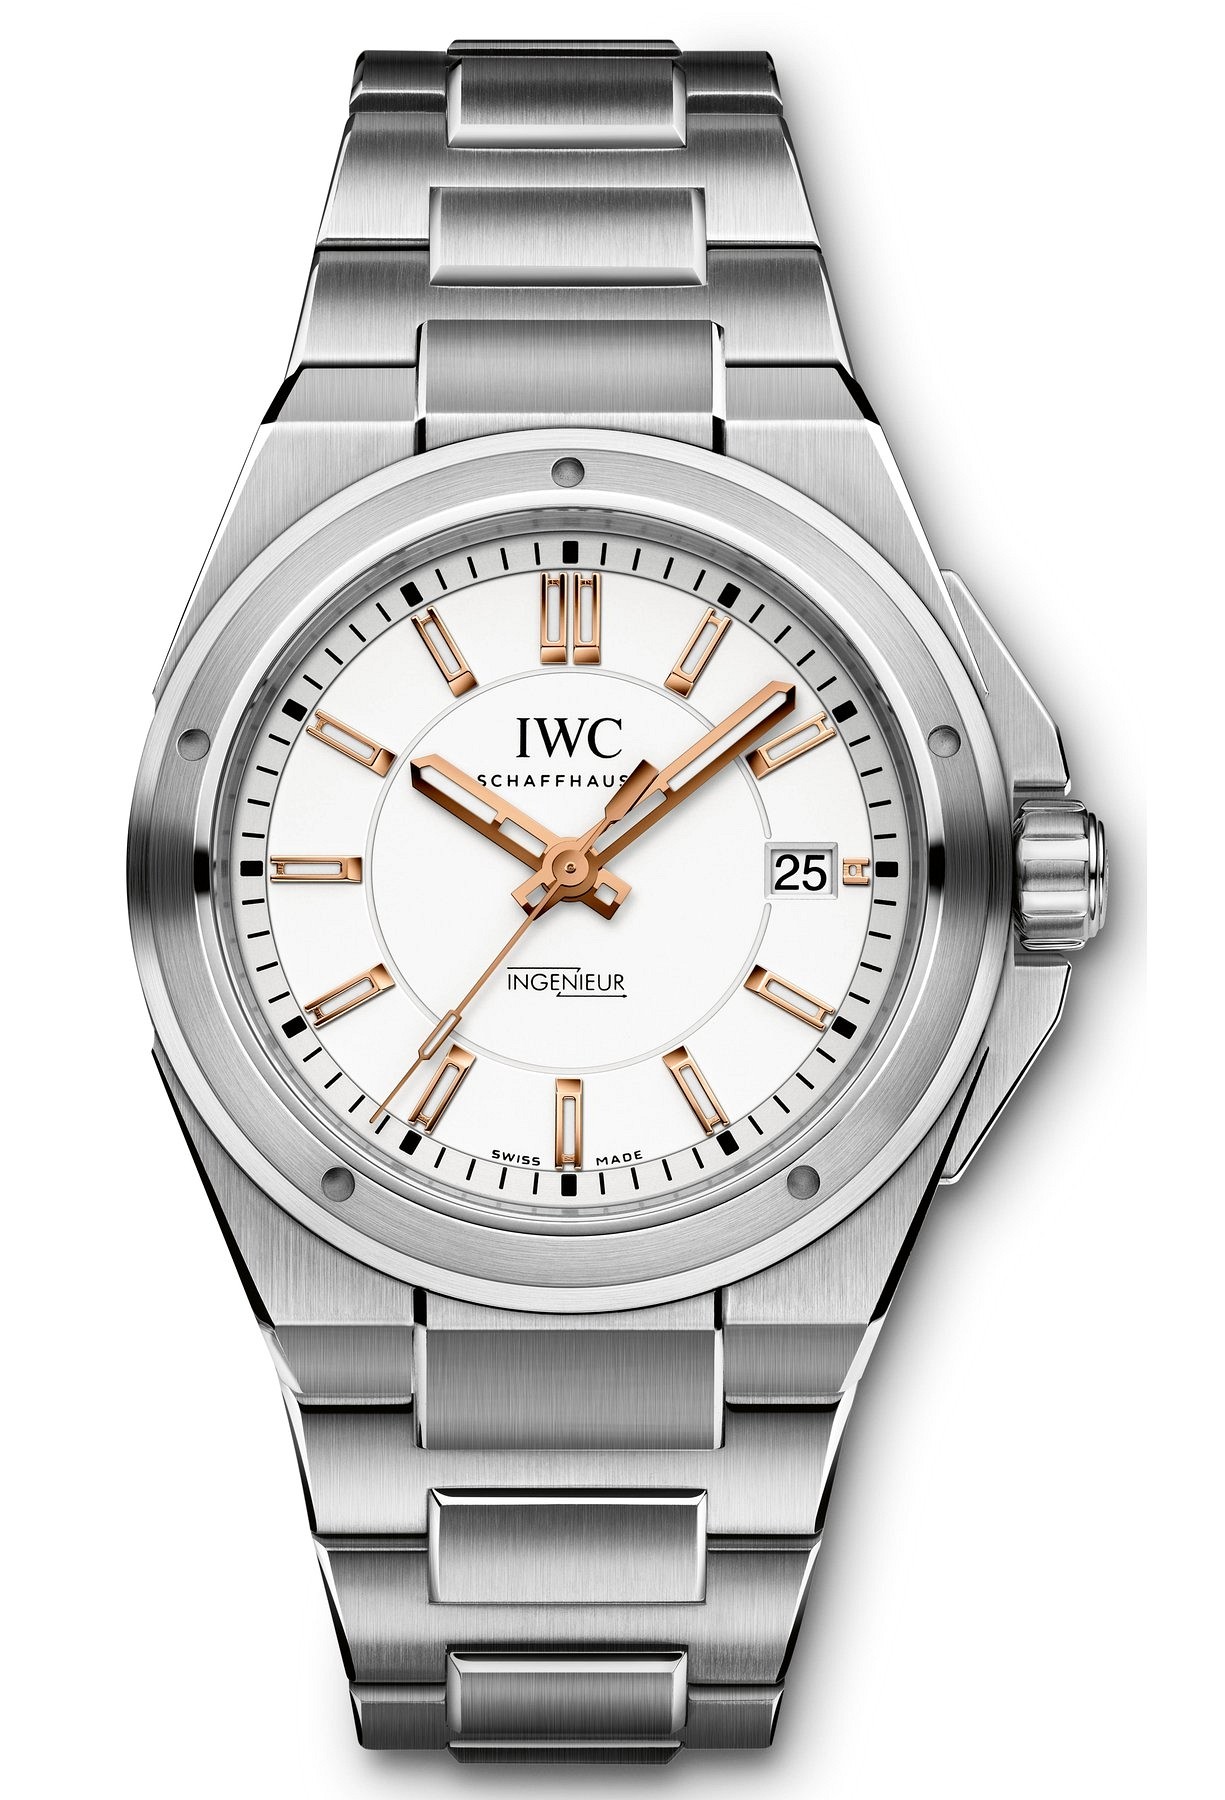 IWC Ingenieur IW3239-06